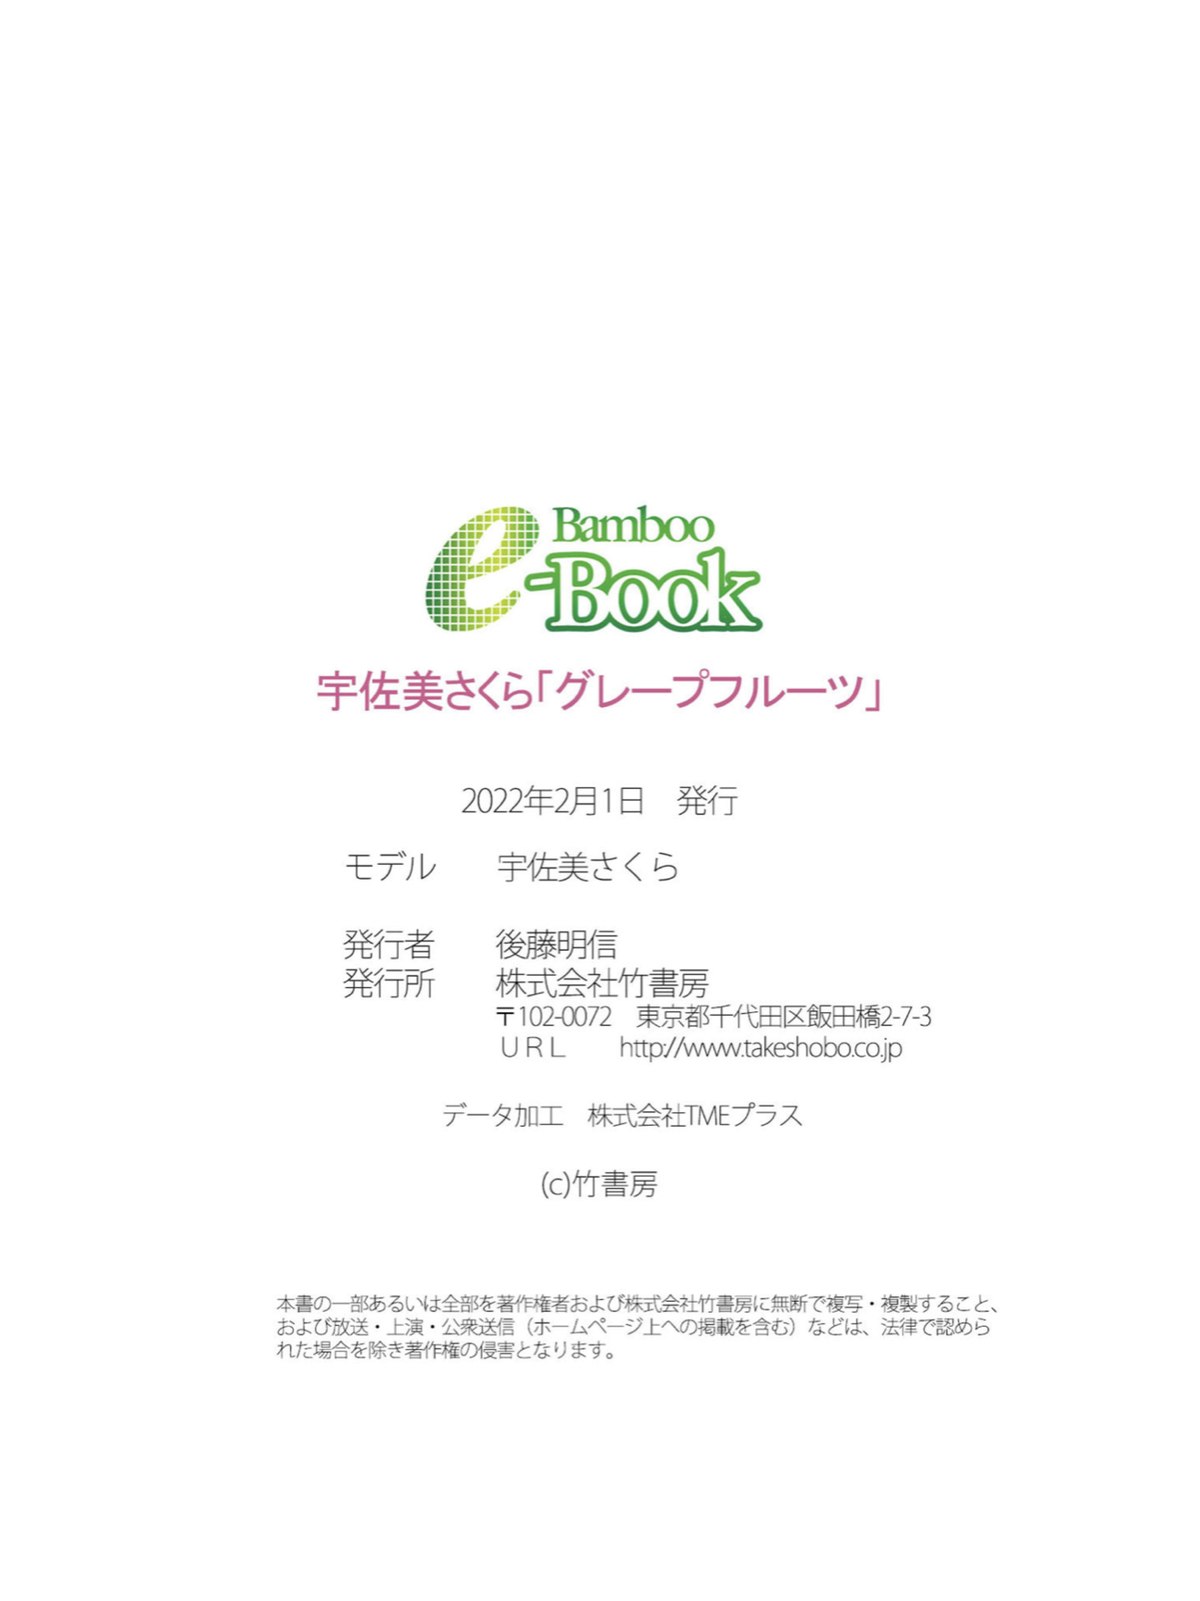 Bamboo e Book Sakura Usami 宇佐美さくら Grapefruit 0058 1748354928.jpg